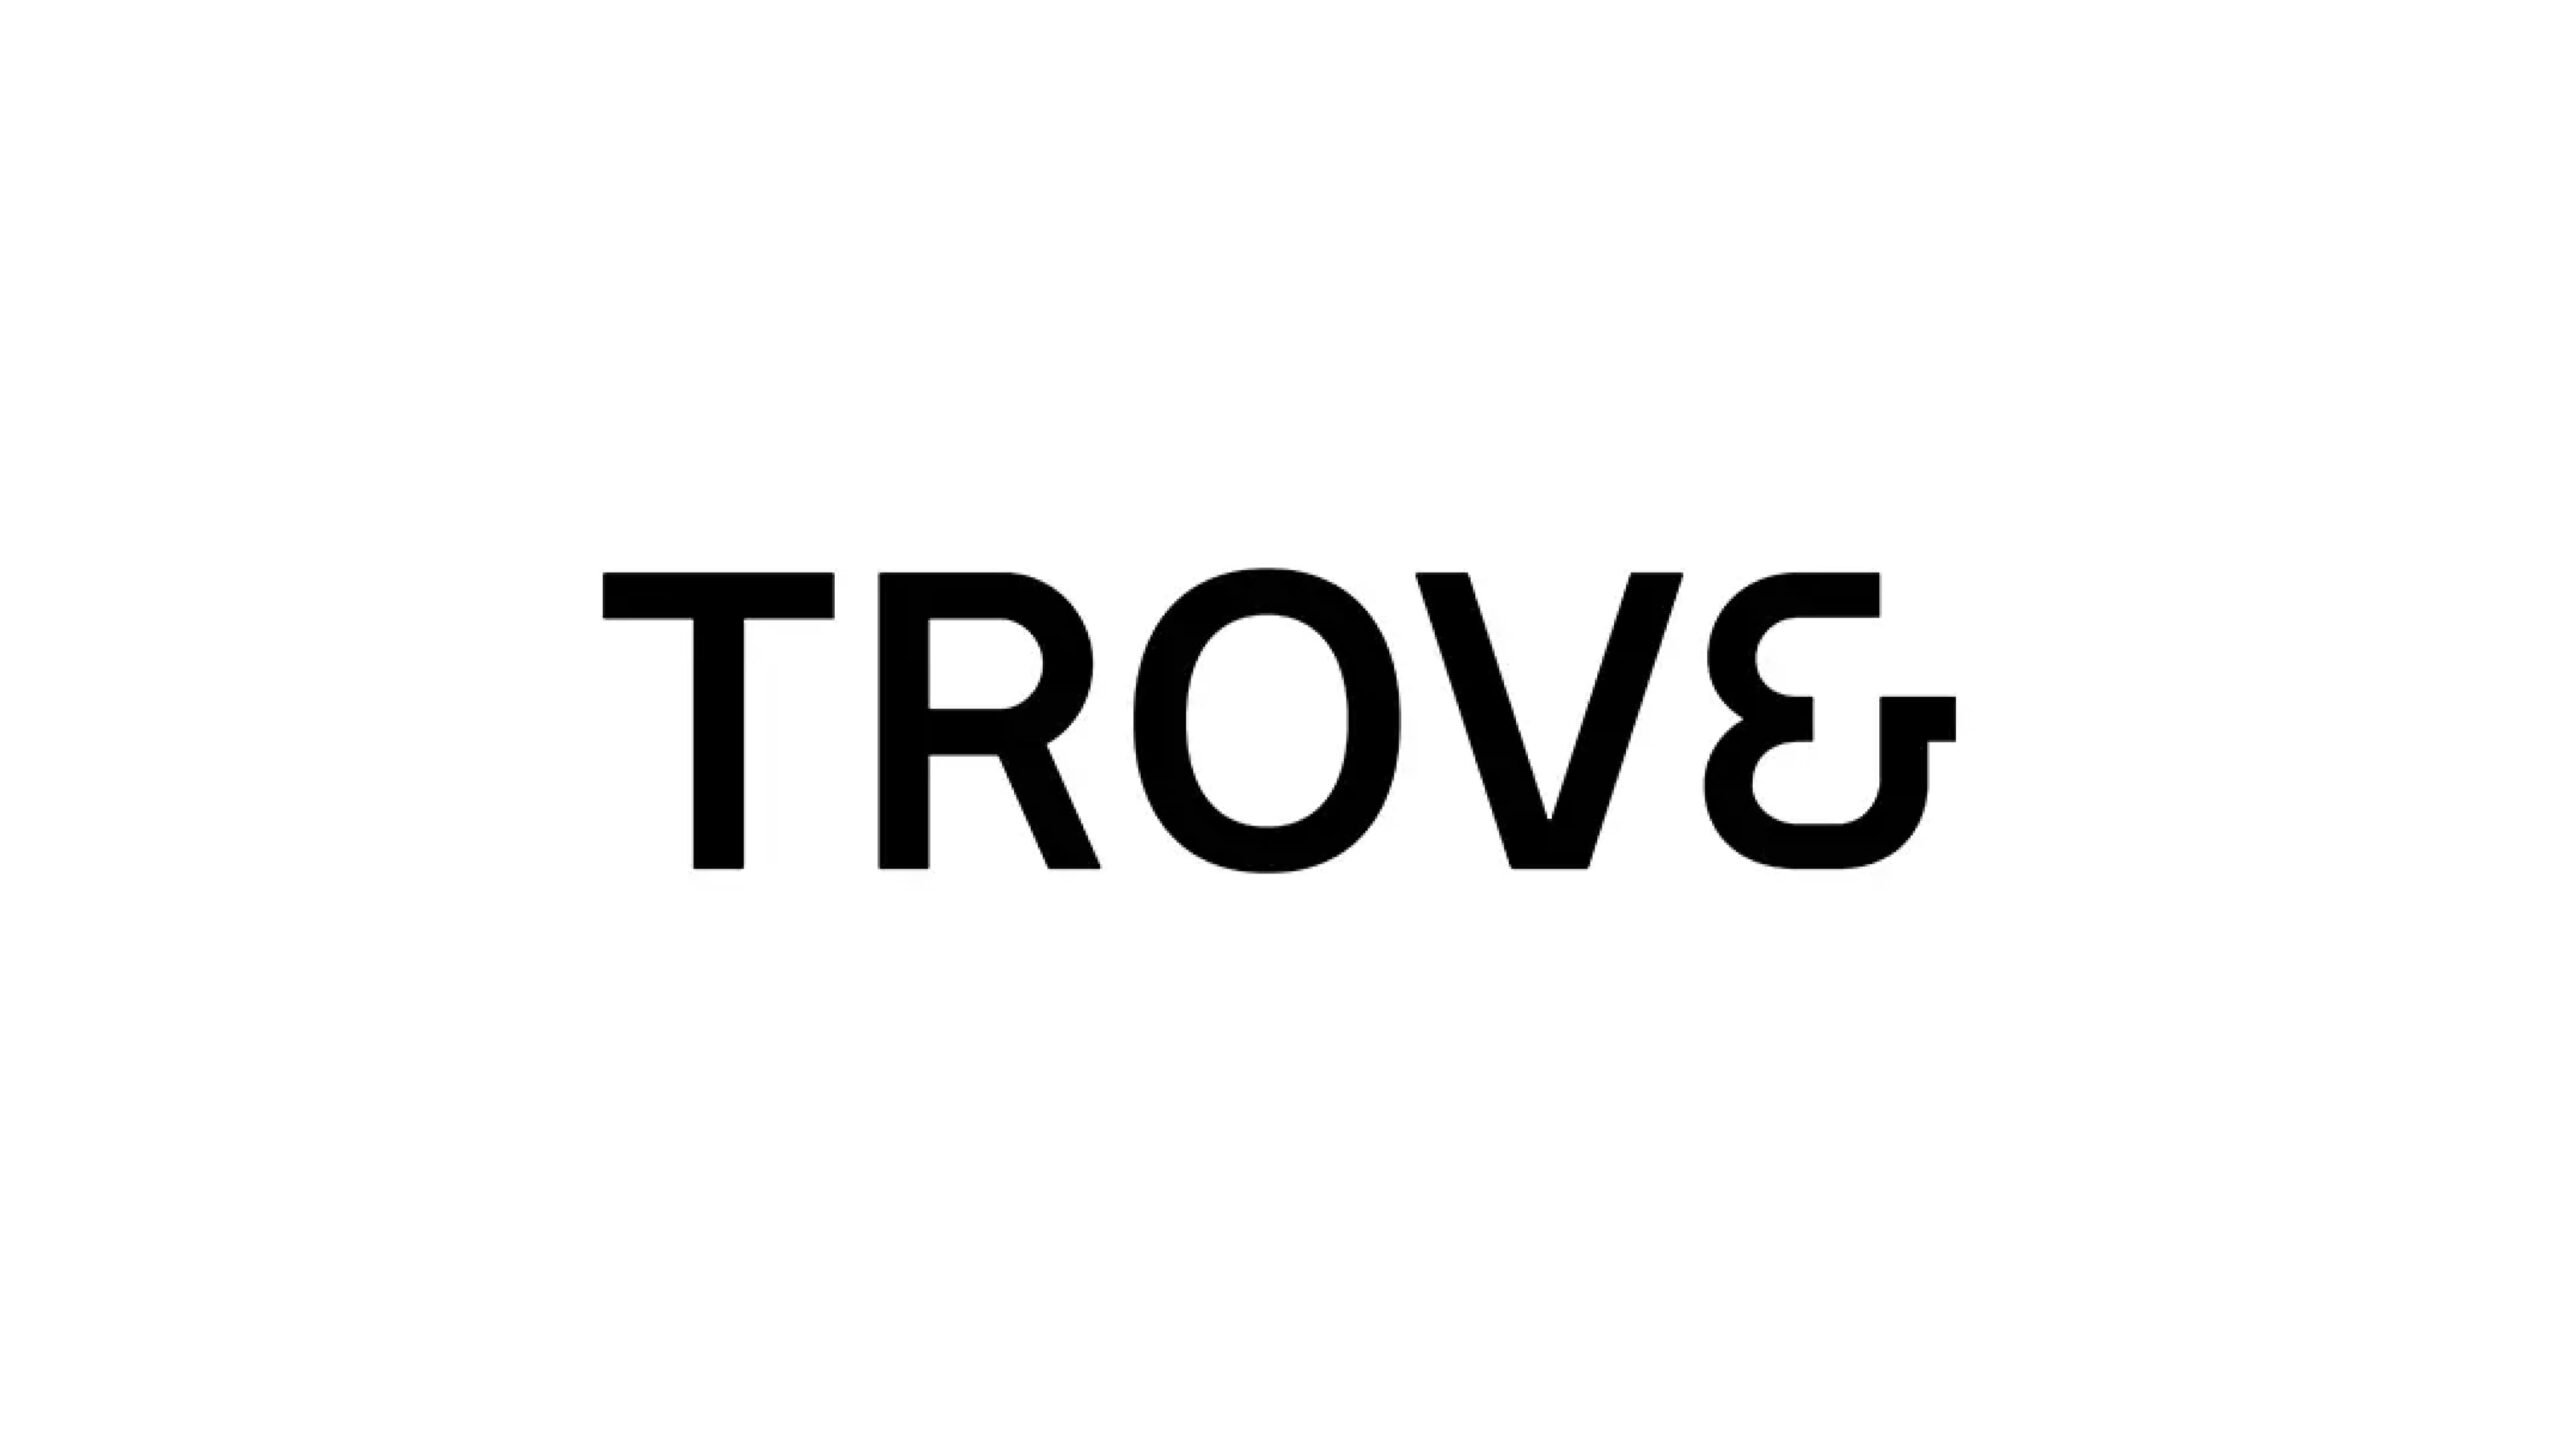 「Trove Recommerce, Inc.」へ株式会社グローバル・ブレインが出資